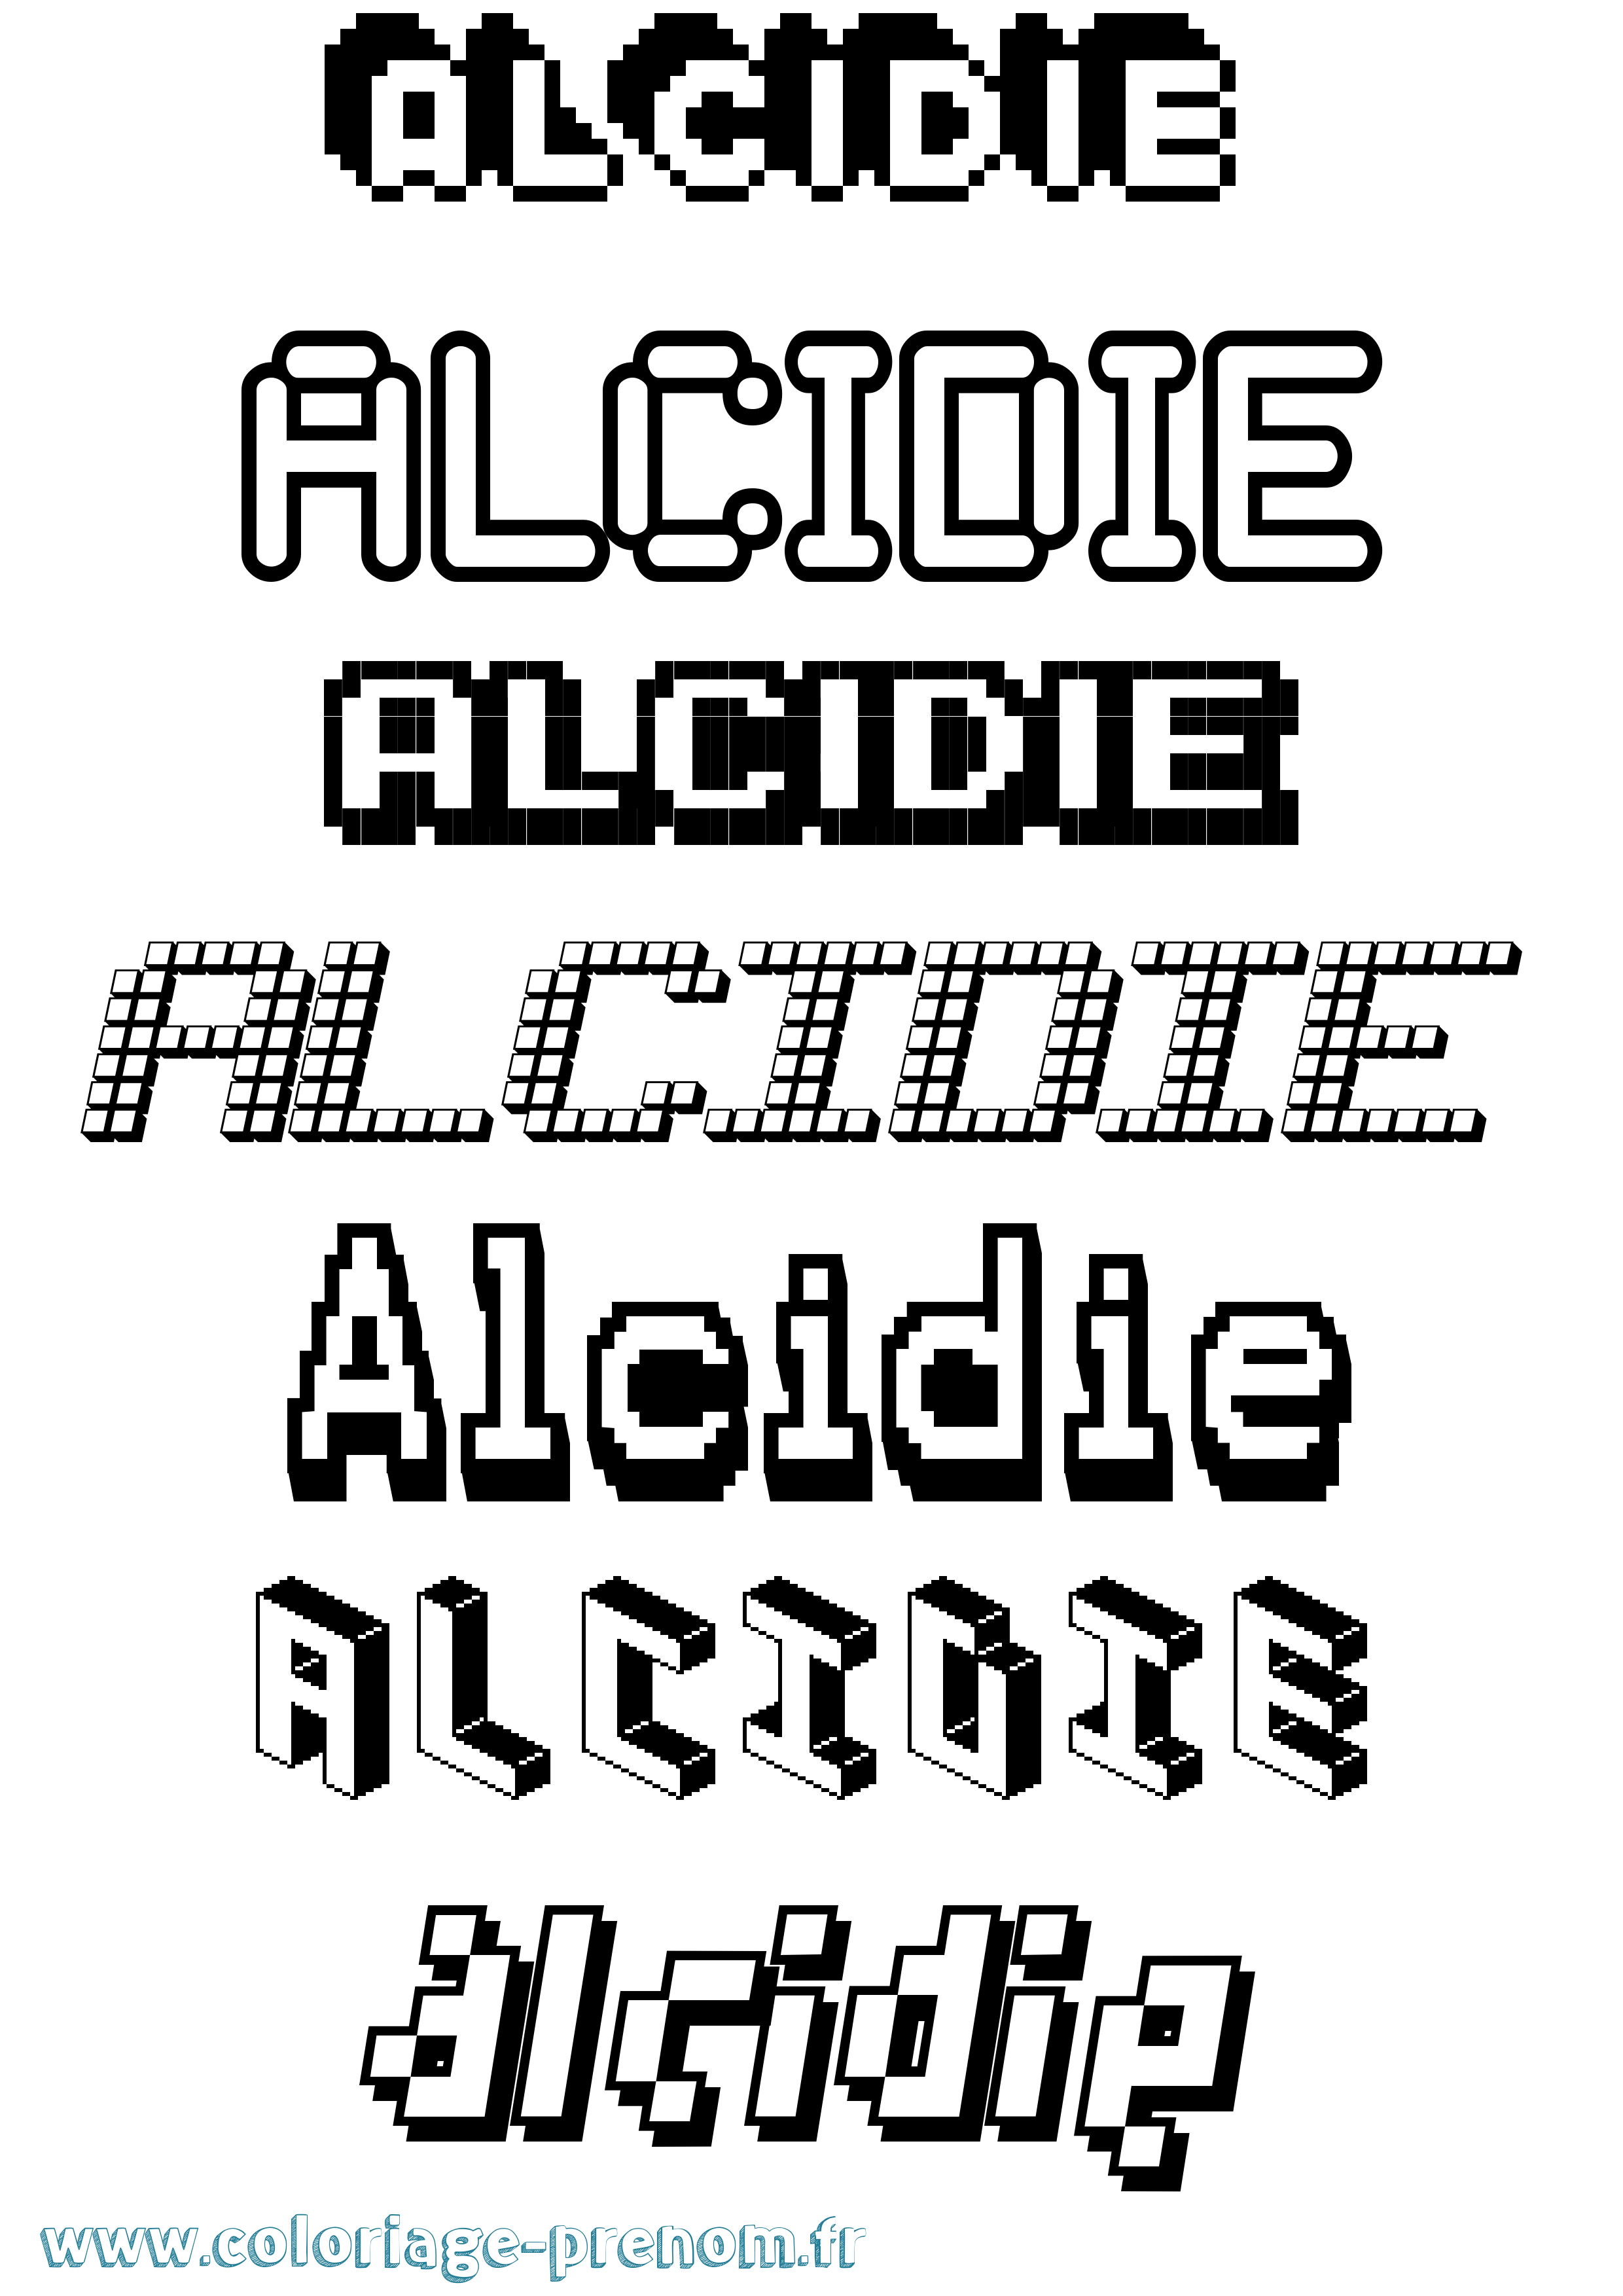 Coloriage prénom Alcidie Pixel